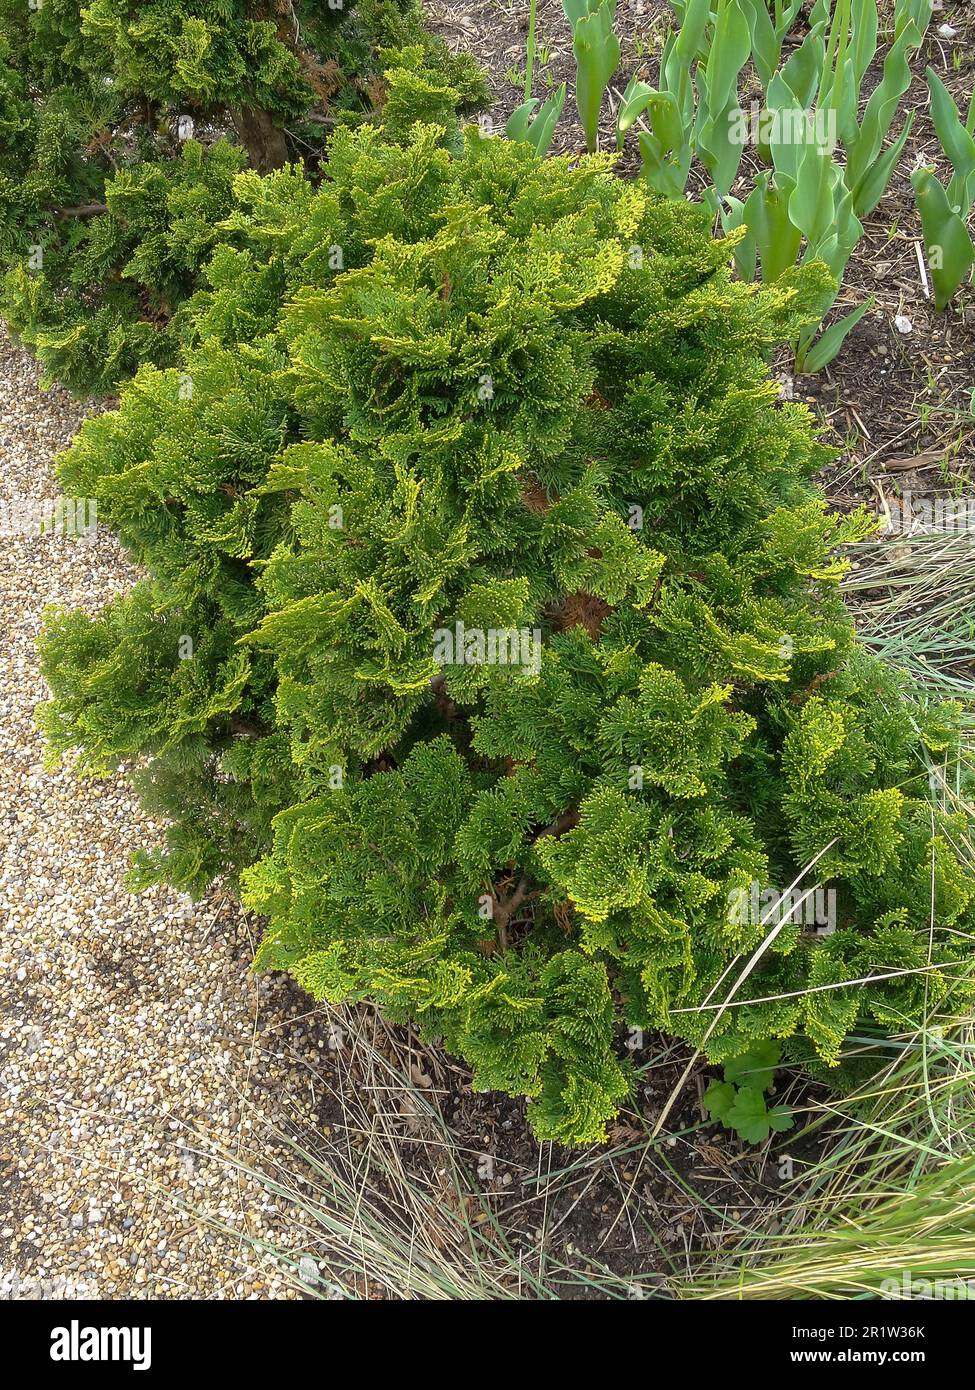 Close up plant portrait of highly patterned Chamaecyparis Obtusa Nana Gracilis Stock Photo